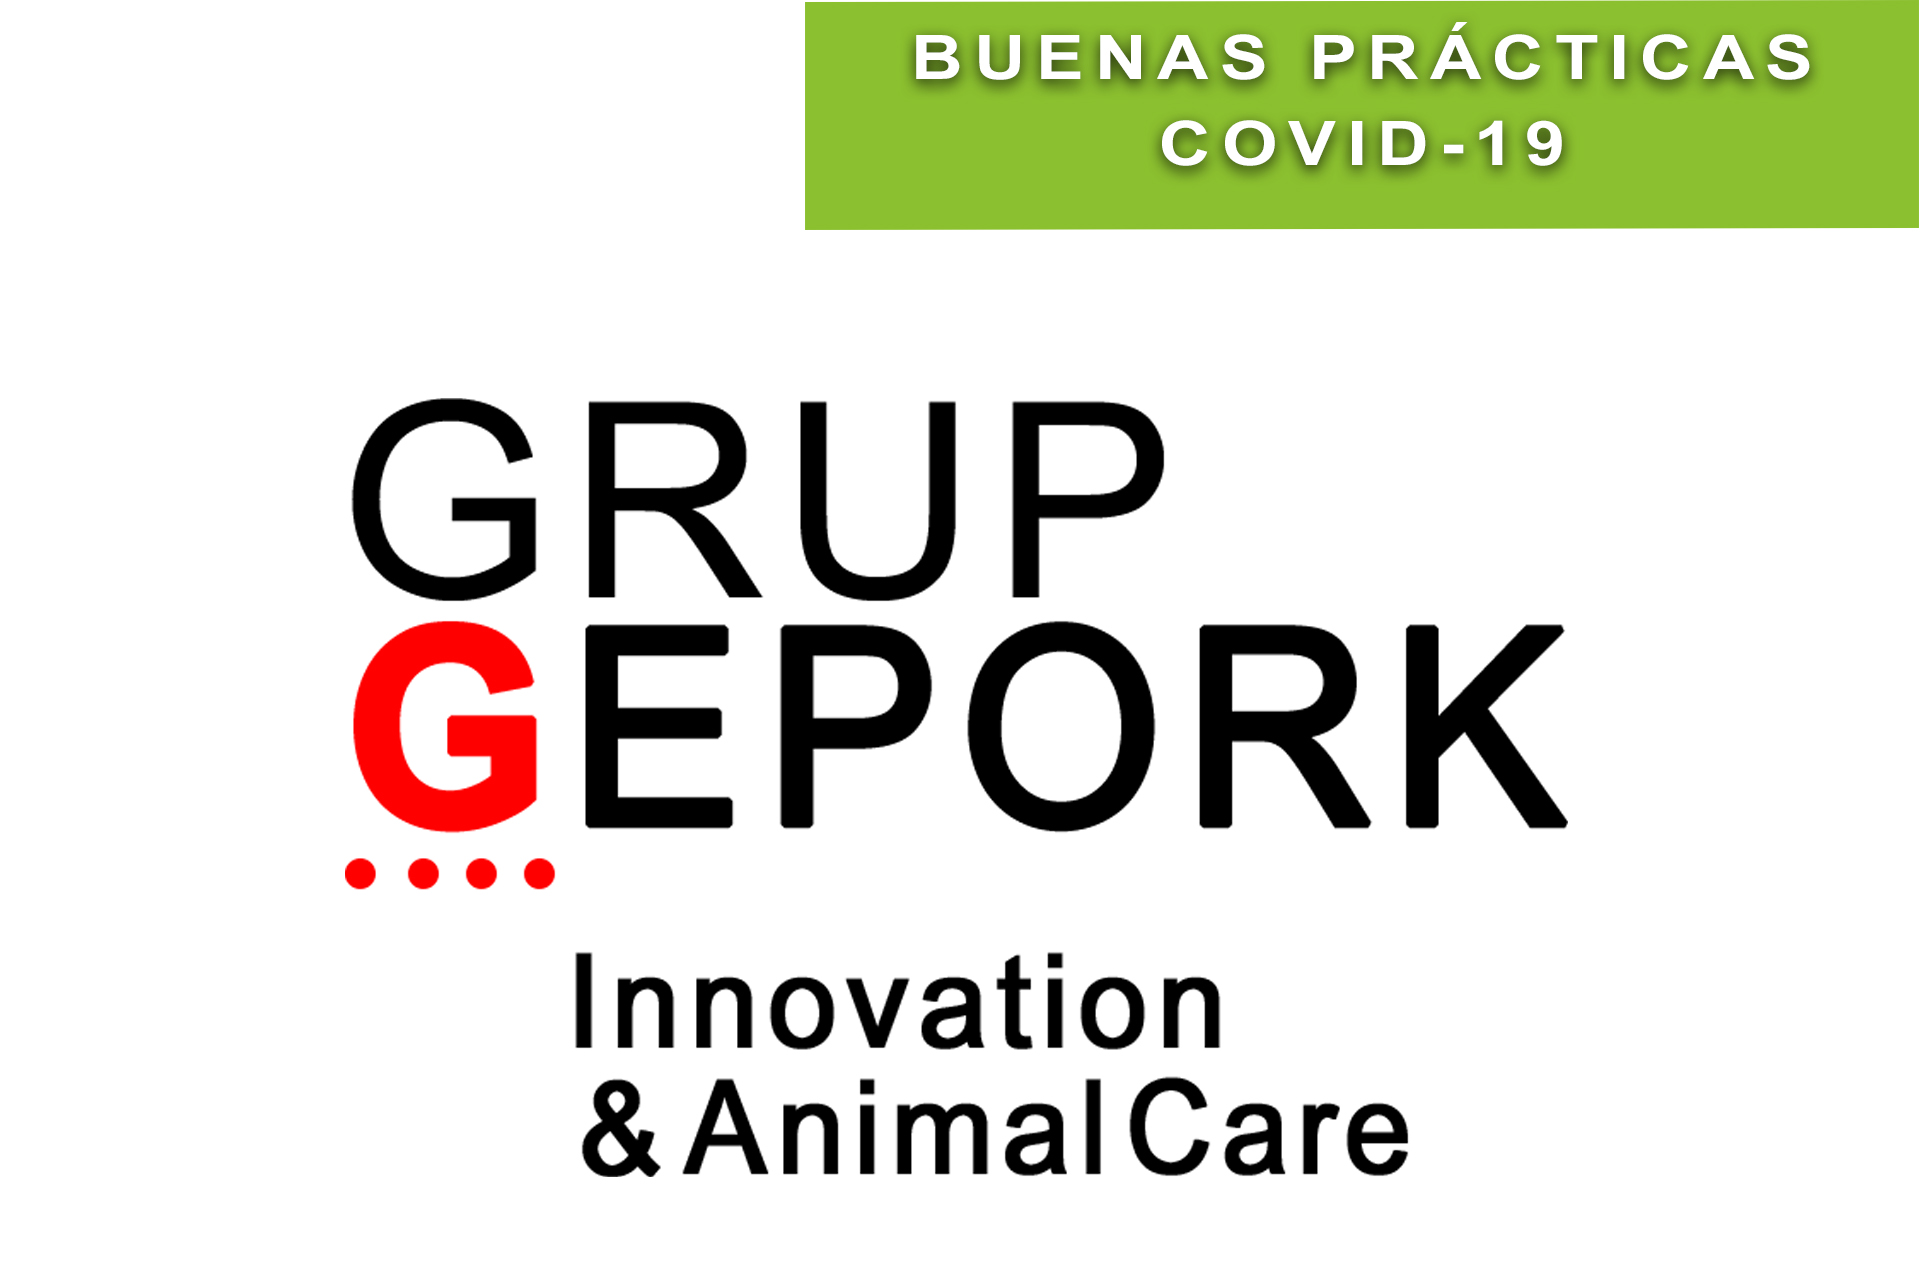 Grup Gepork dona cerca de 1.000 euros en material sanitario al Consorcio Hospitalario de Vic